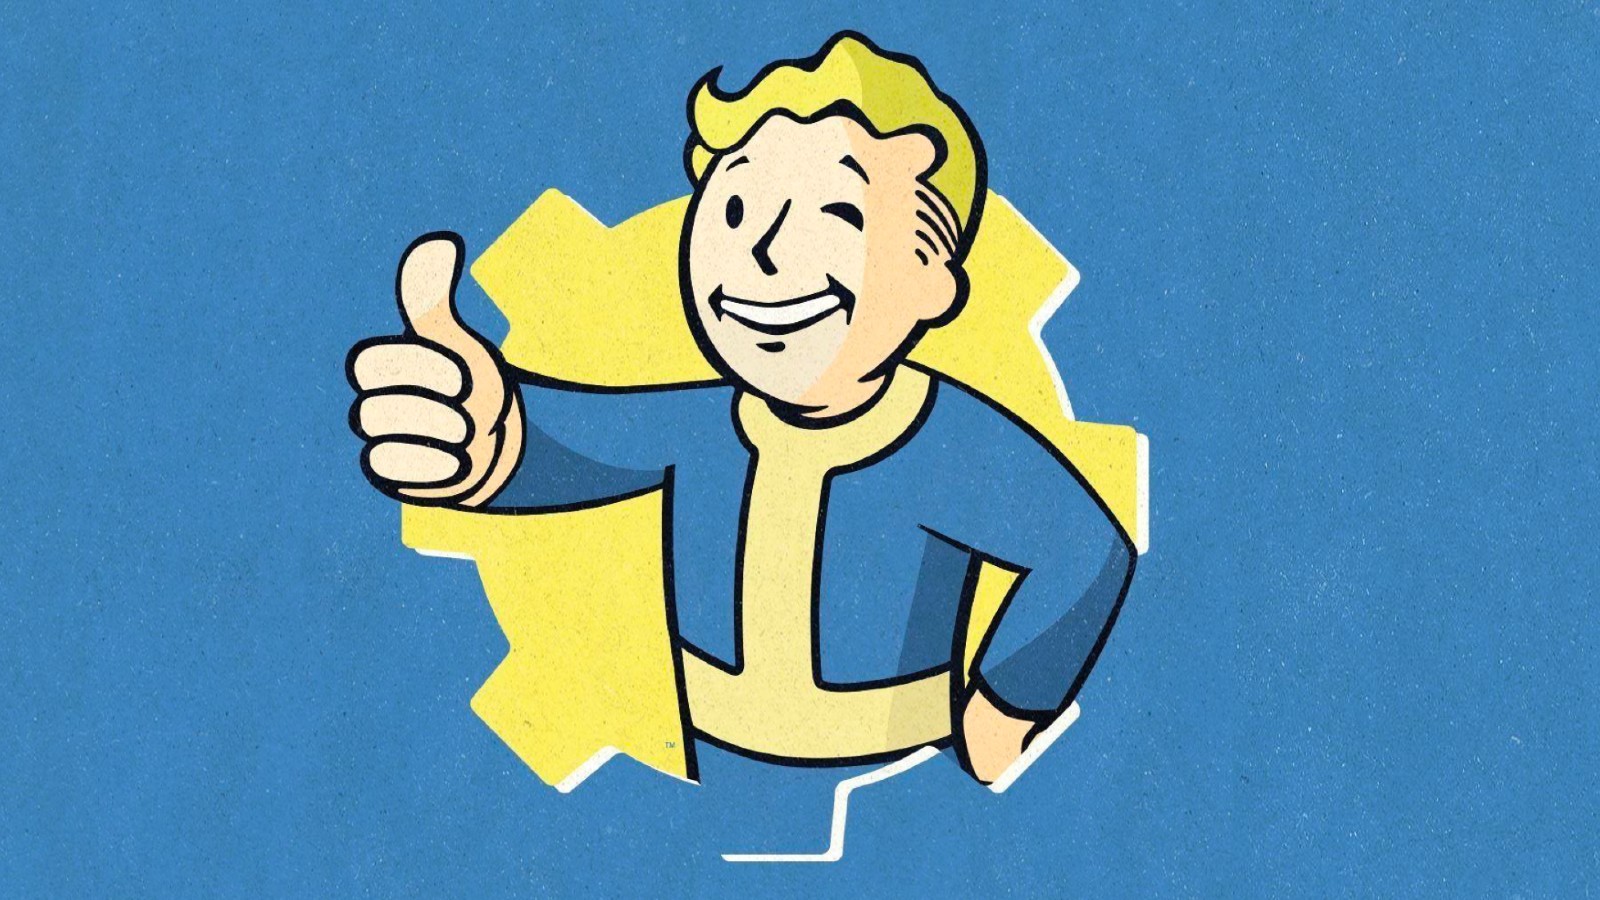 Fallout 3 Remaster: Rumors, platform & everything we know - Dexerto